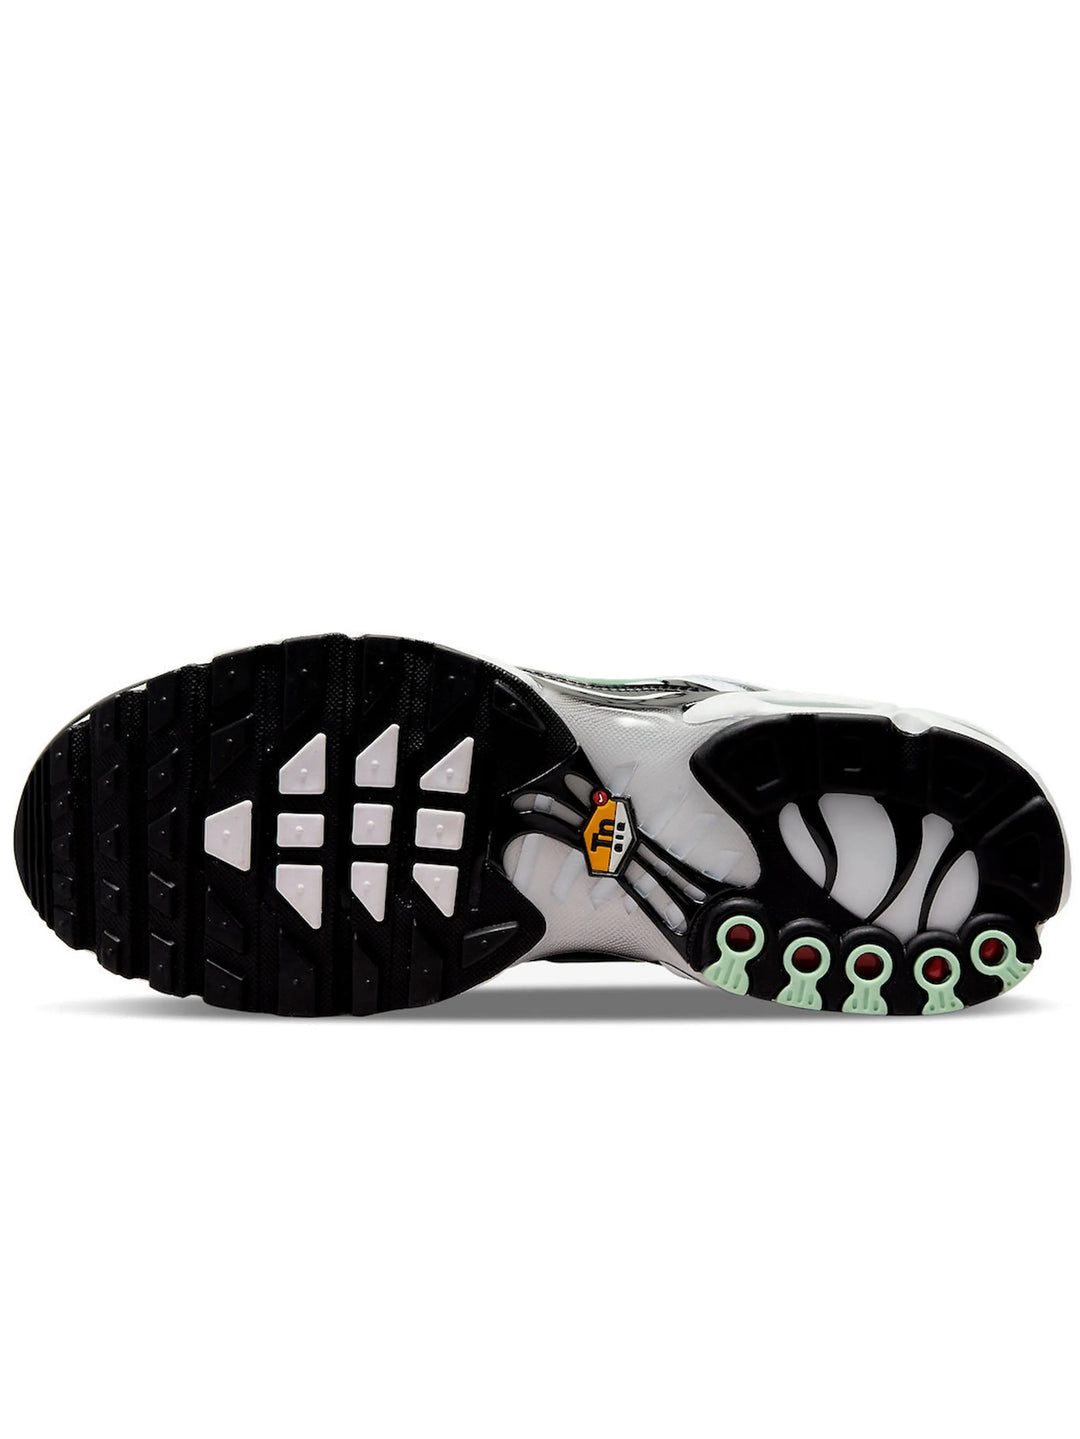 Nike Air Max Plus Tn White Black Mint Green Prior